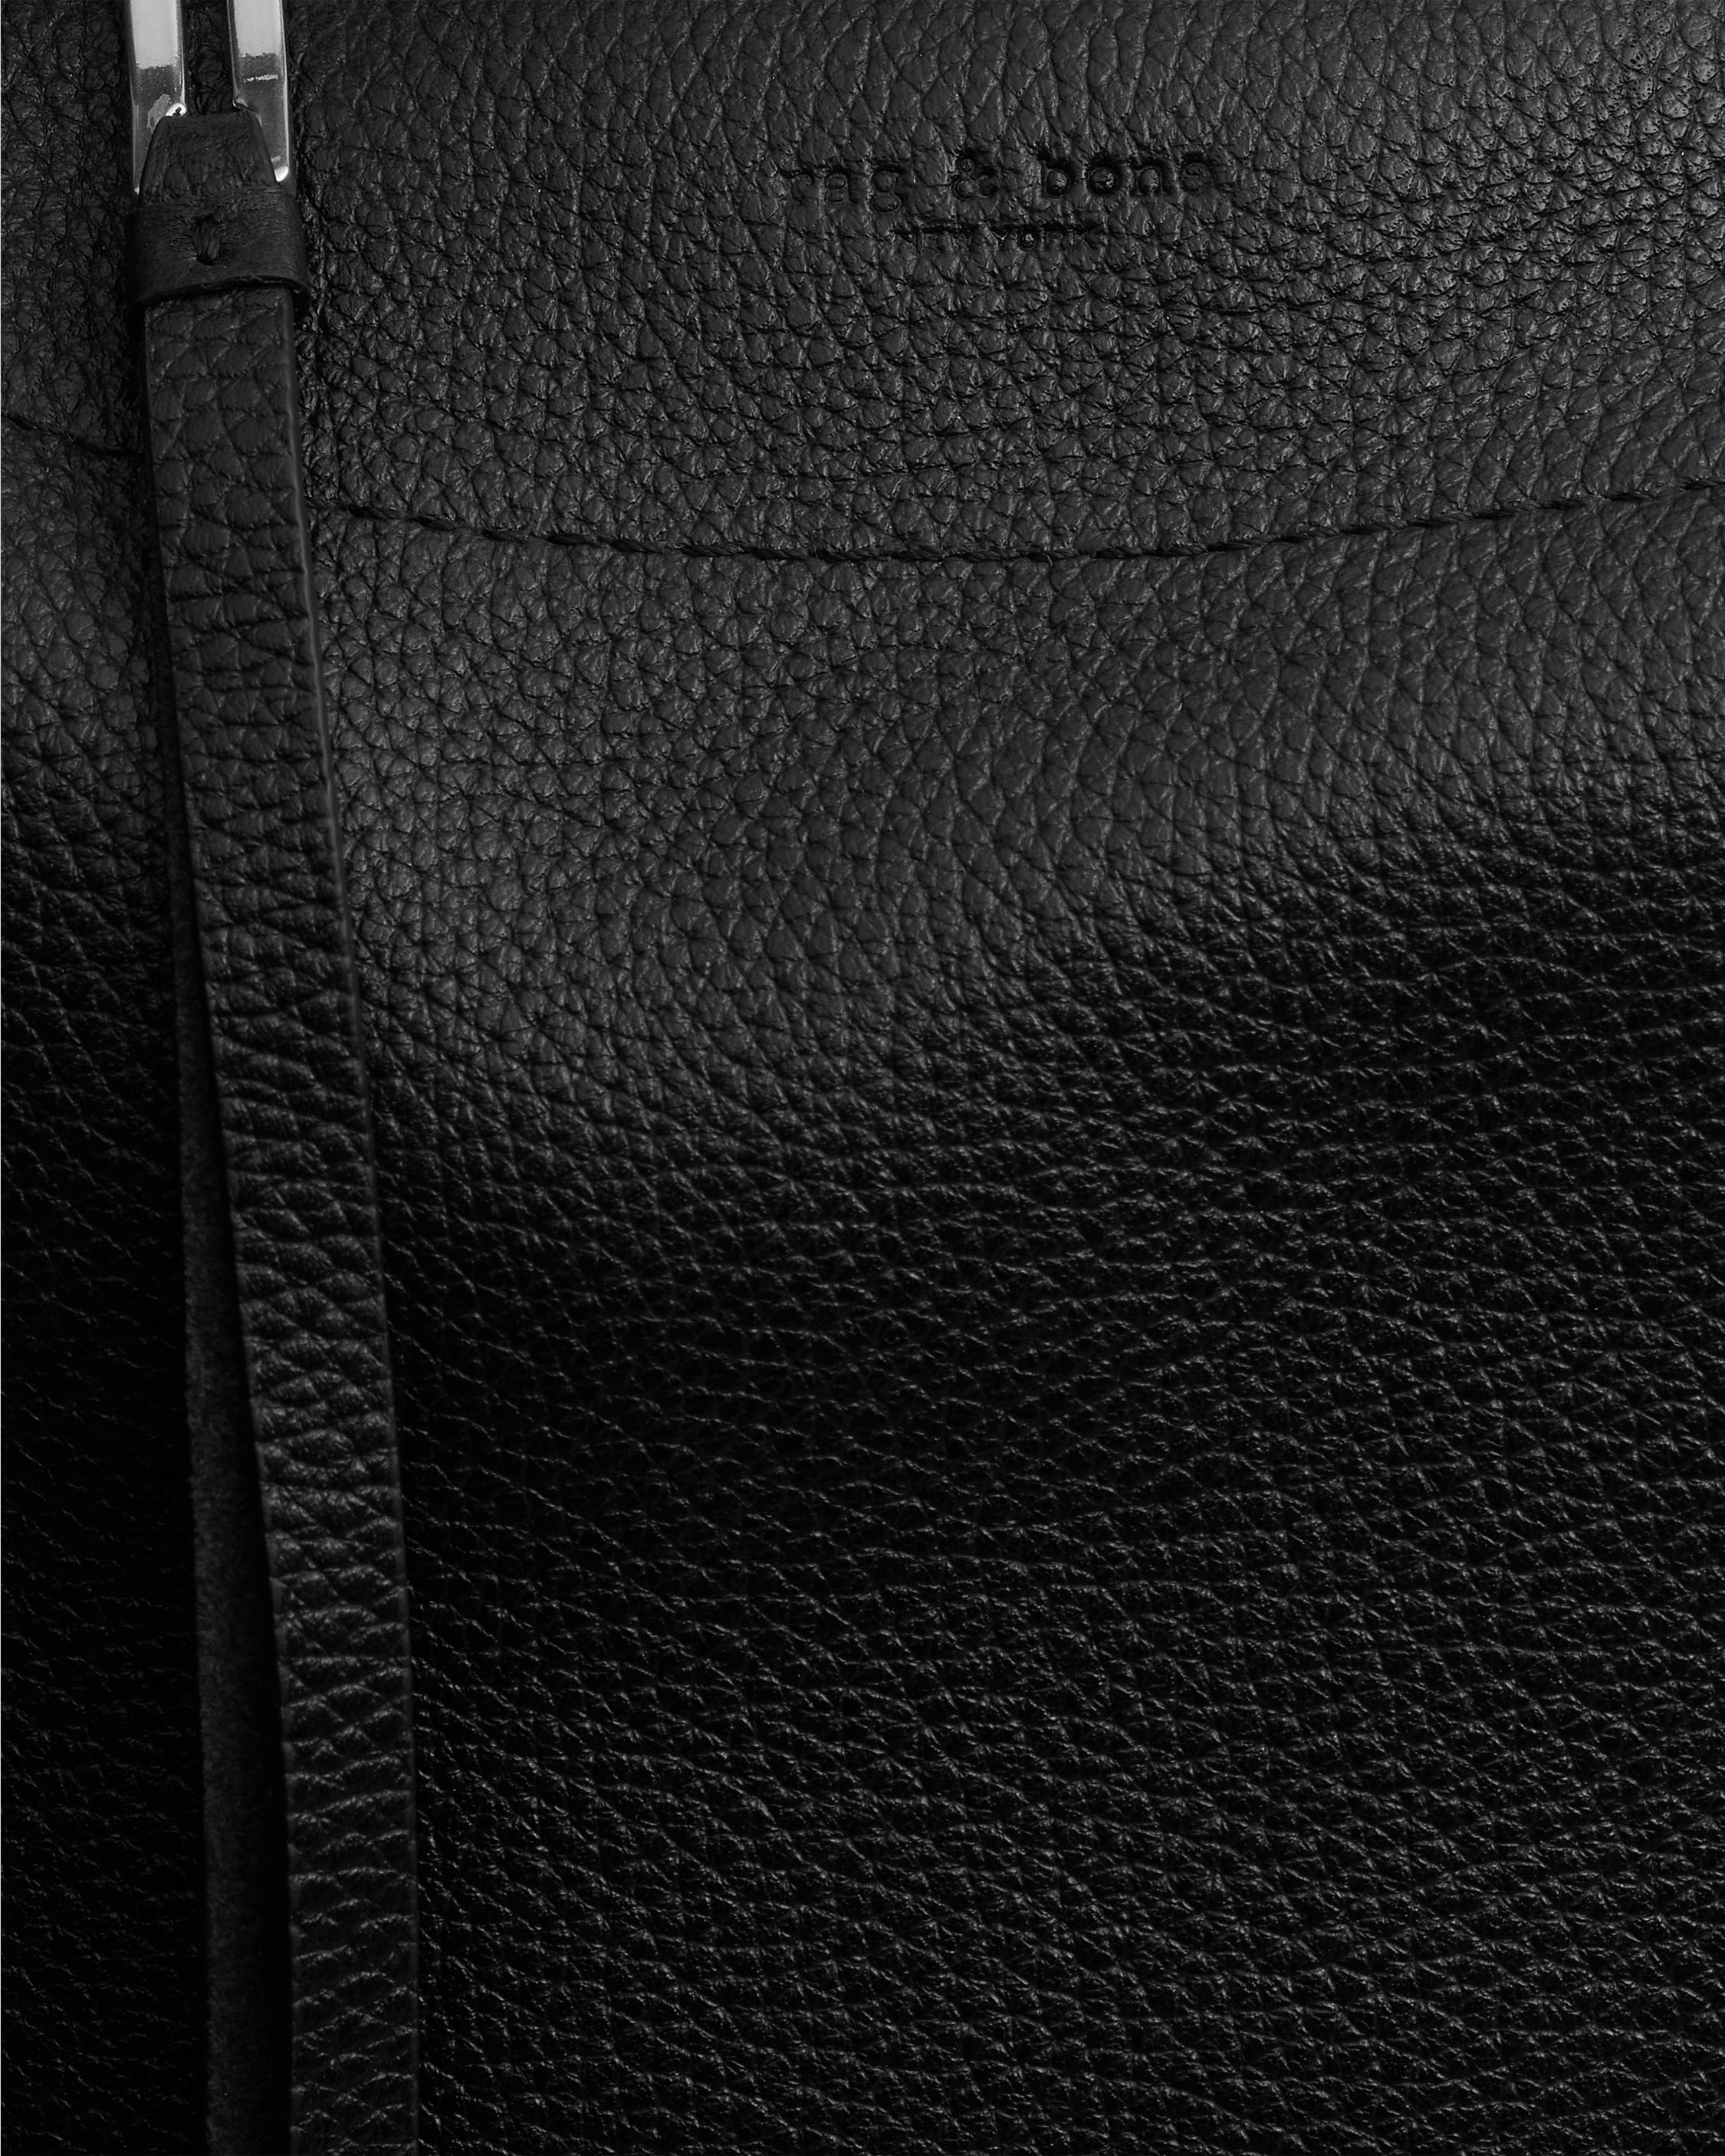 Belize Bucket Bag - Leather
Crossbody Bag - 5